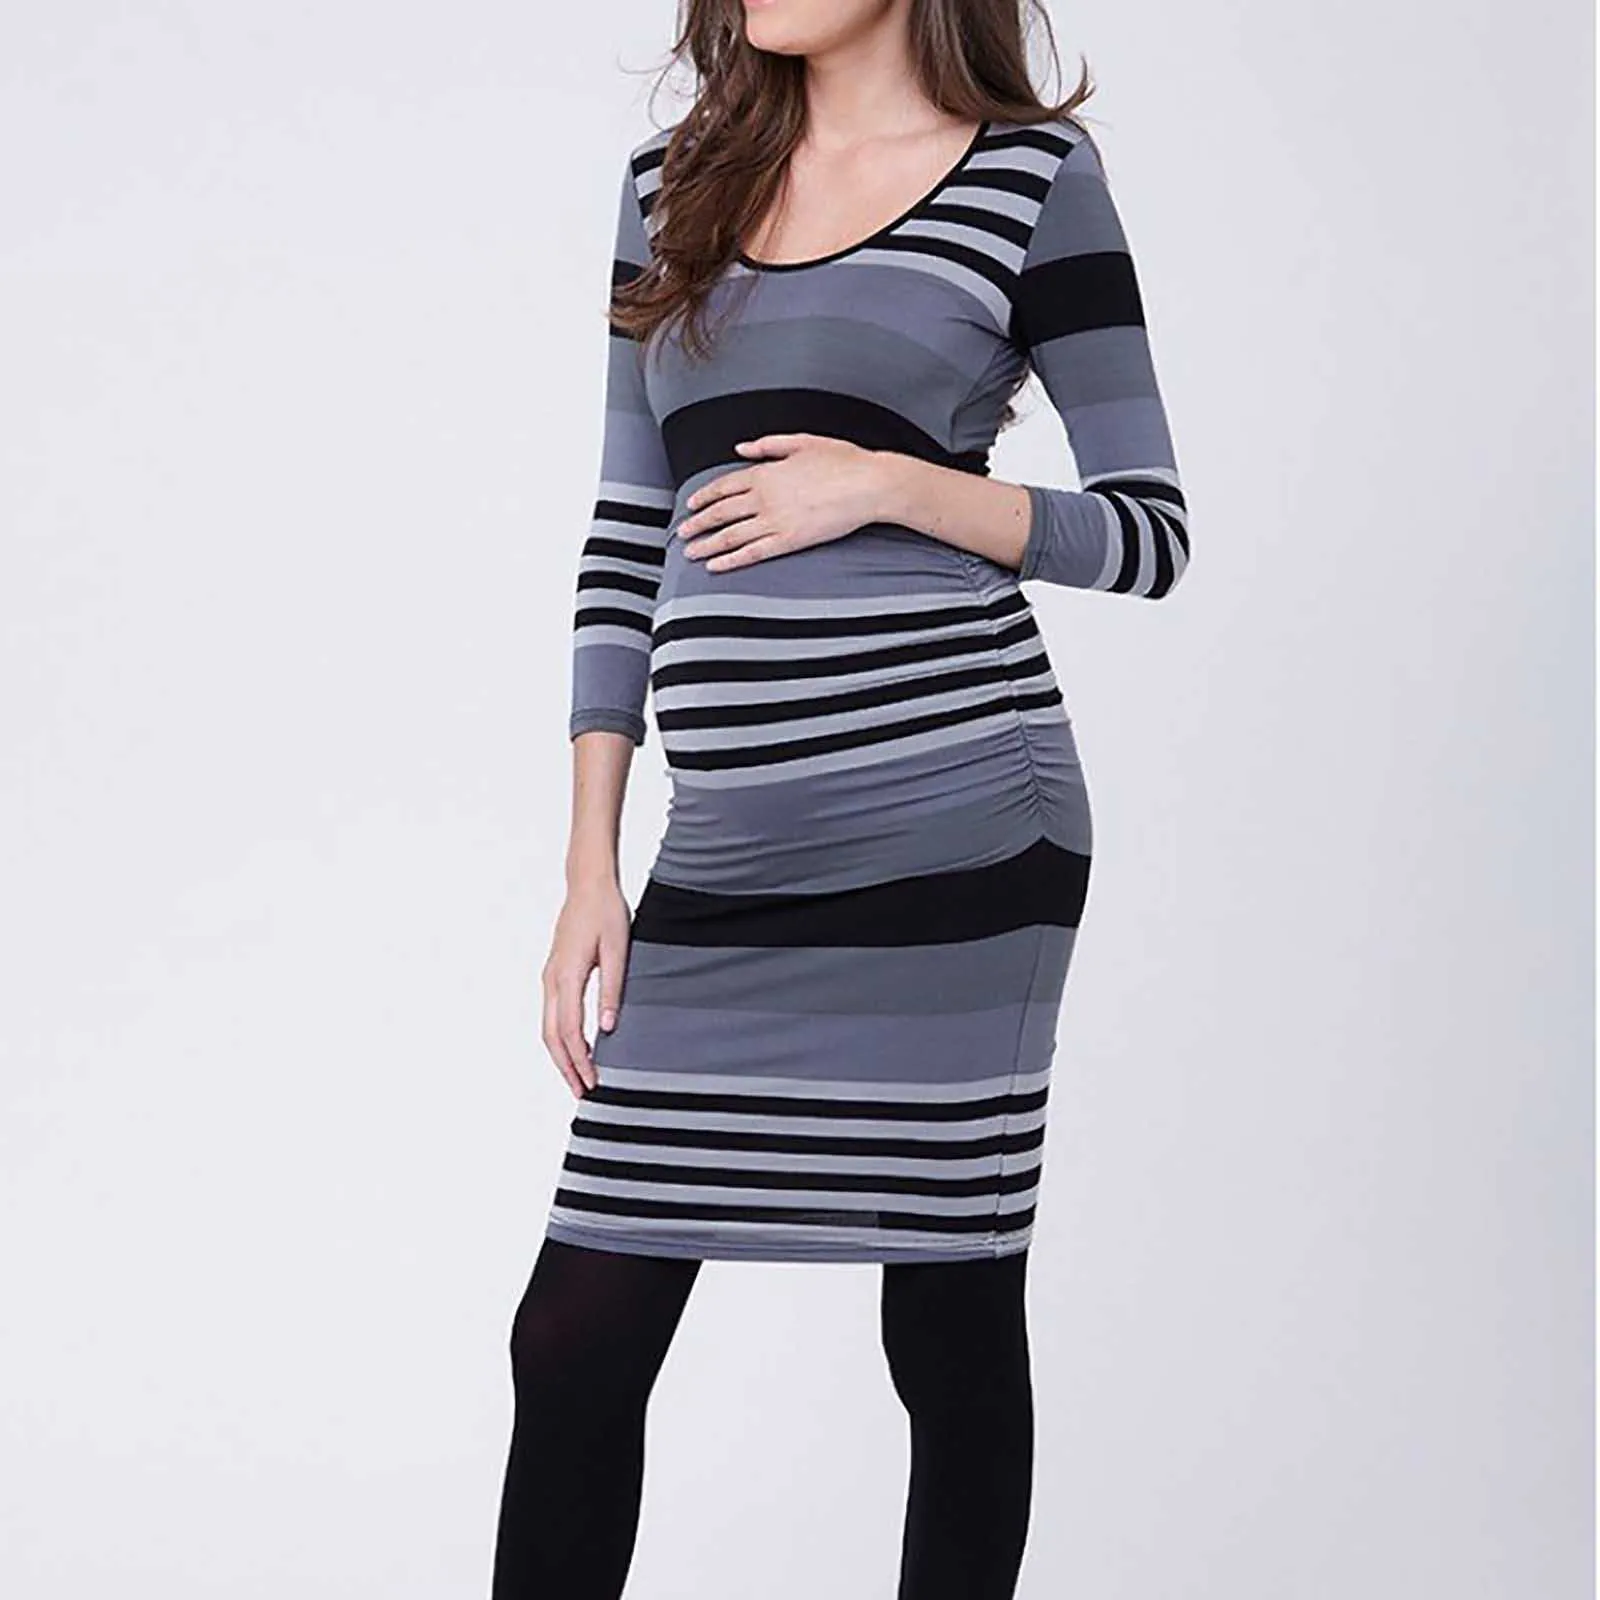 Schwangerschaftskleid Mode Schwangere Kleidung Frauen Umstandskleider Casual Langarm Wrap Stillkleid Schwangerschaftskleidung Q0713